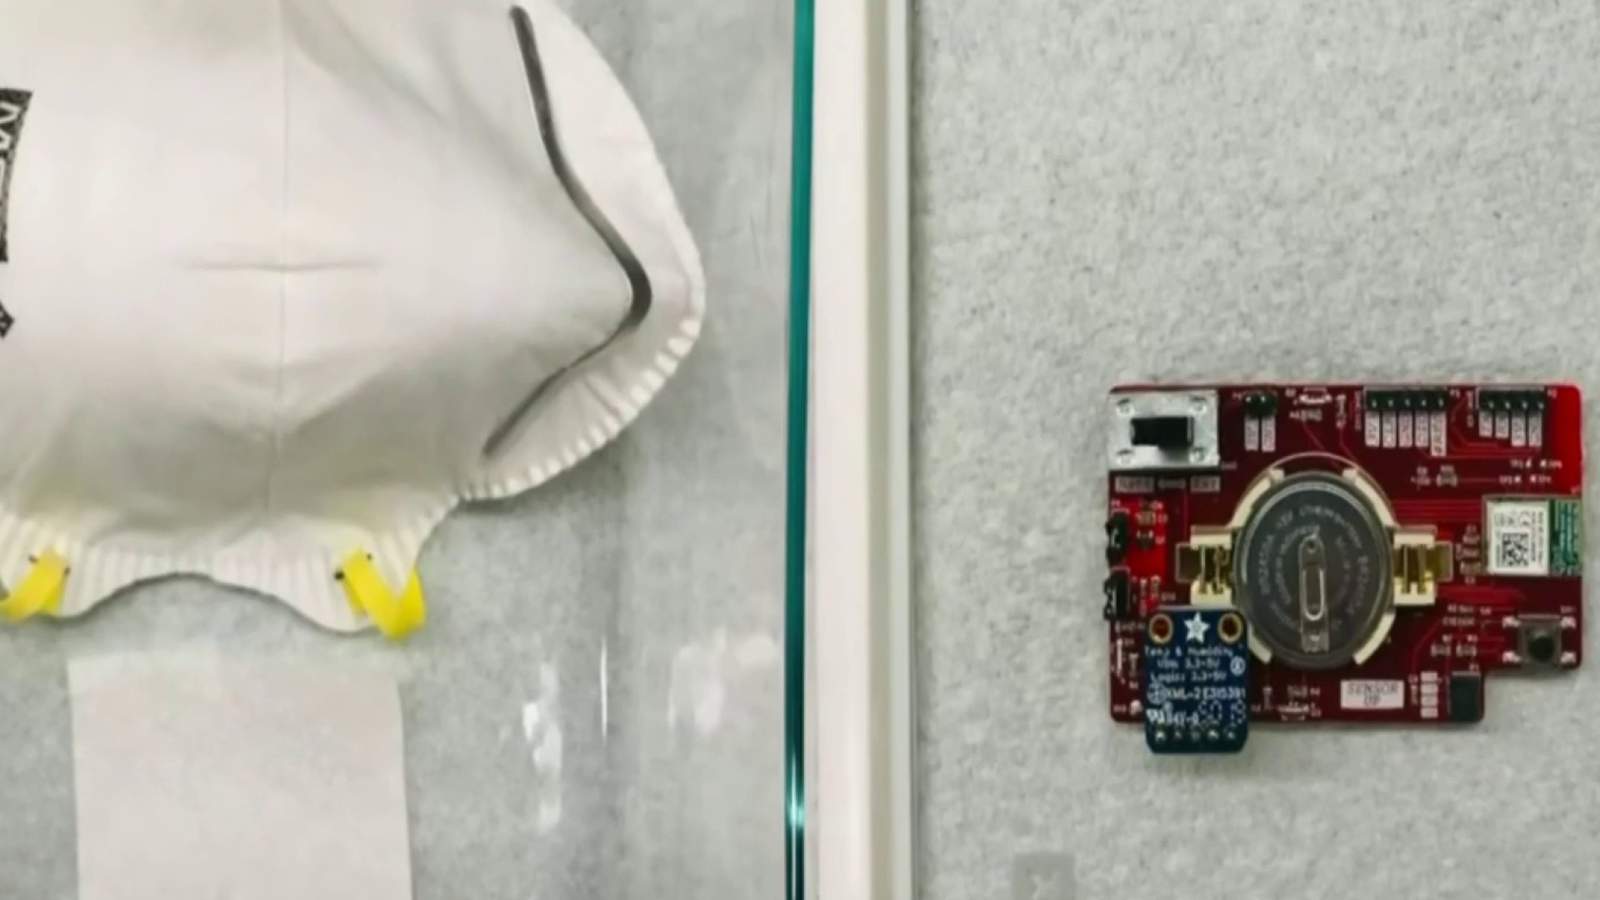 Tech Time: Creating sensors to decontaminate masks